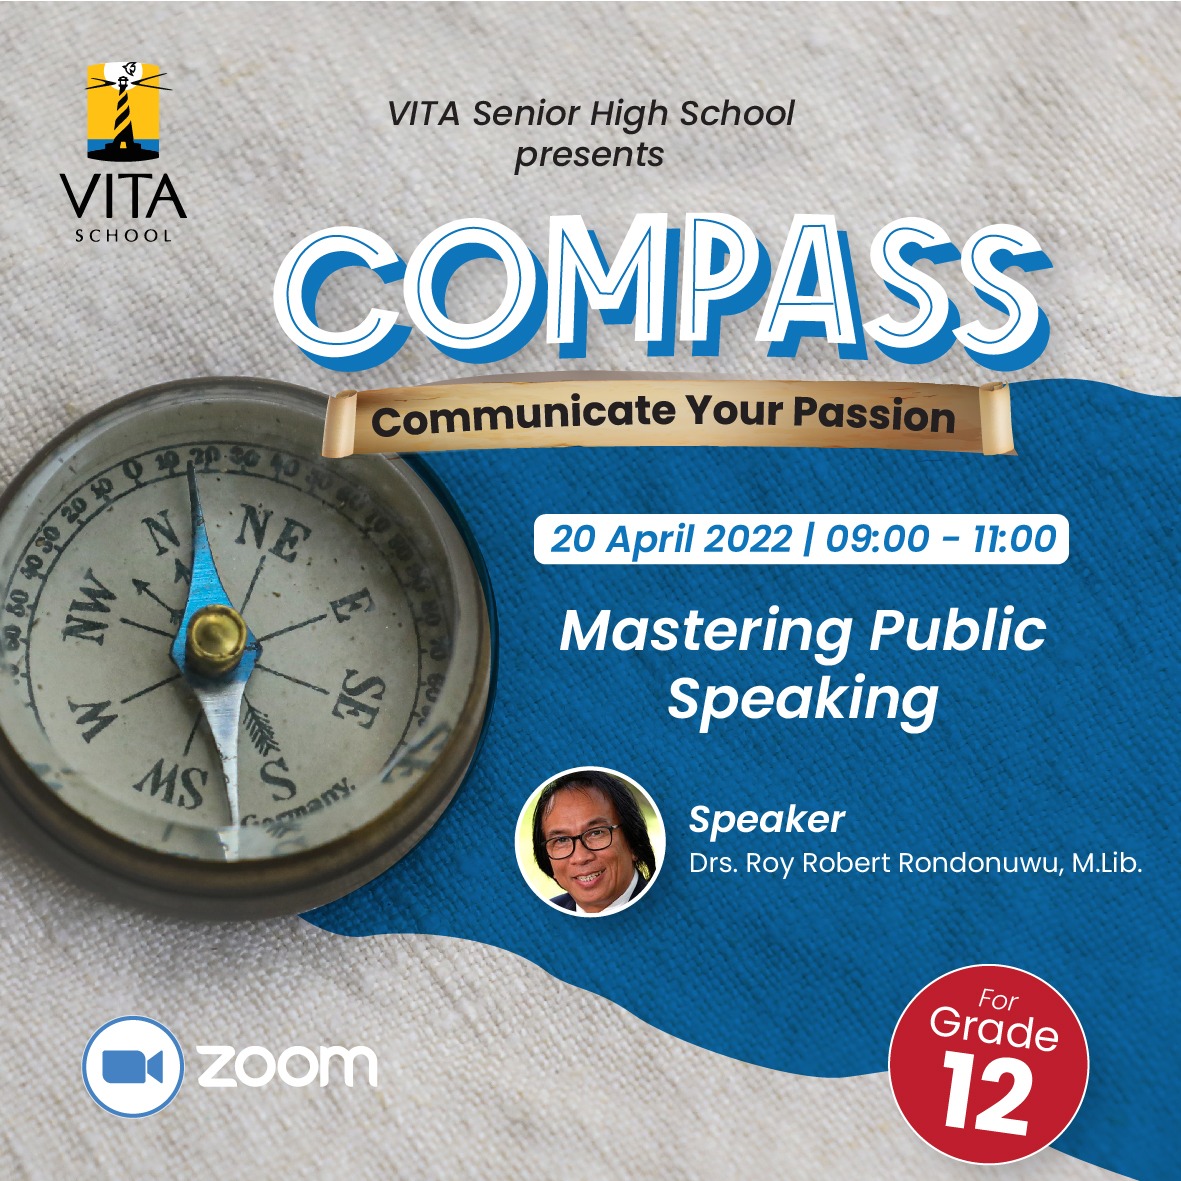 VITA Senior High COMPASS 2022 - Mastering Public Speaking with Drs. Roy Robert Rondonuwu, M.Lib.